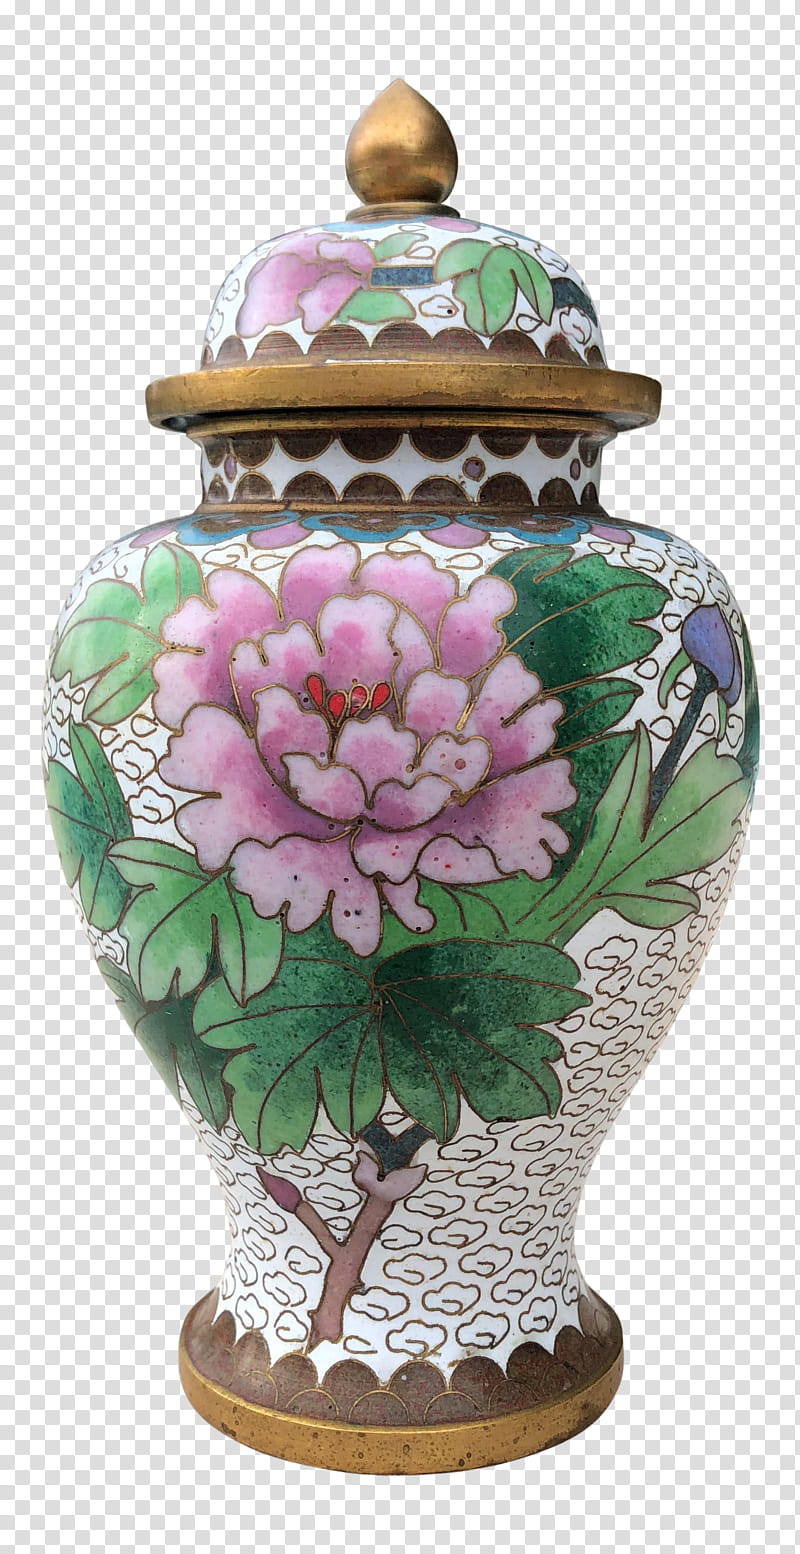 Floral Flower, Vase, Ceramic, Vitreous Enamel, Urn, Antique, Chairish, Lid transparent background PNG clipart